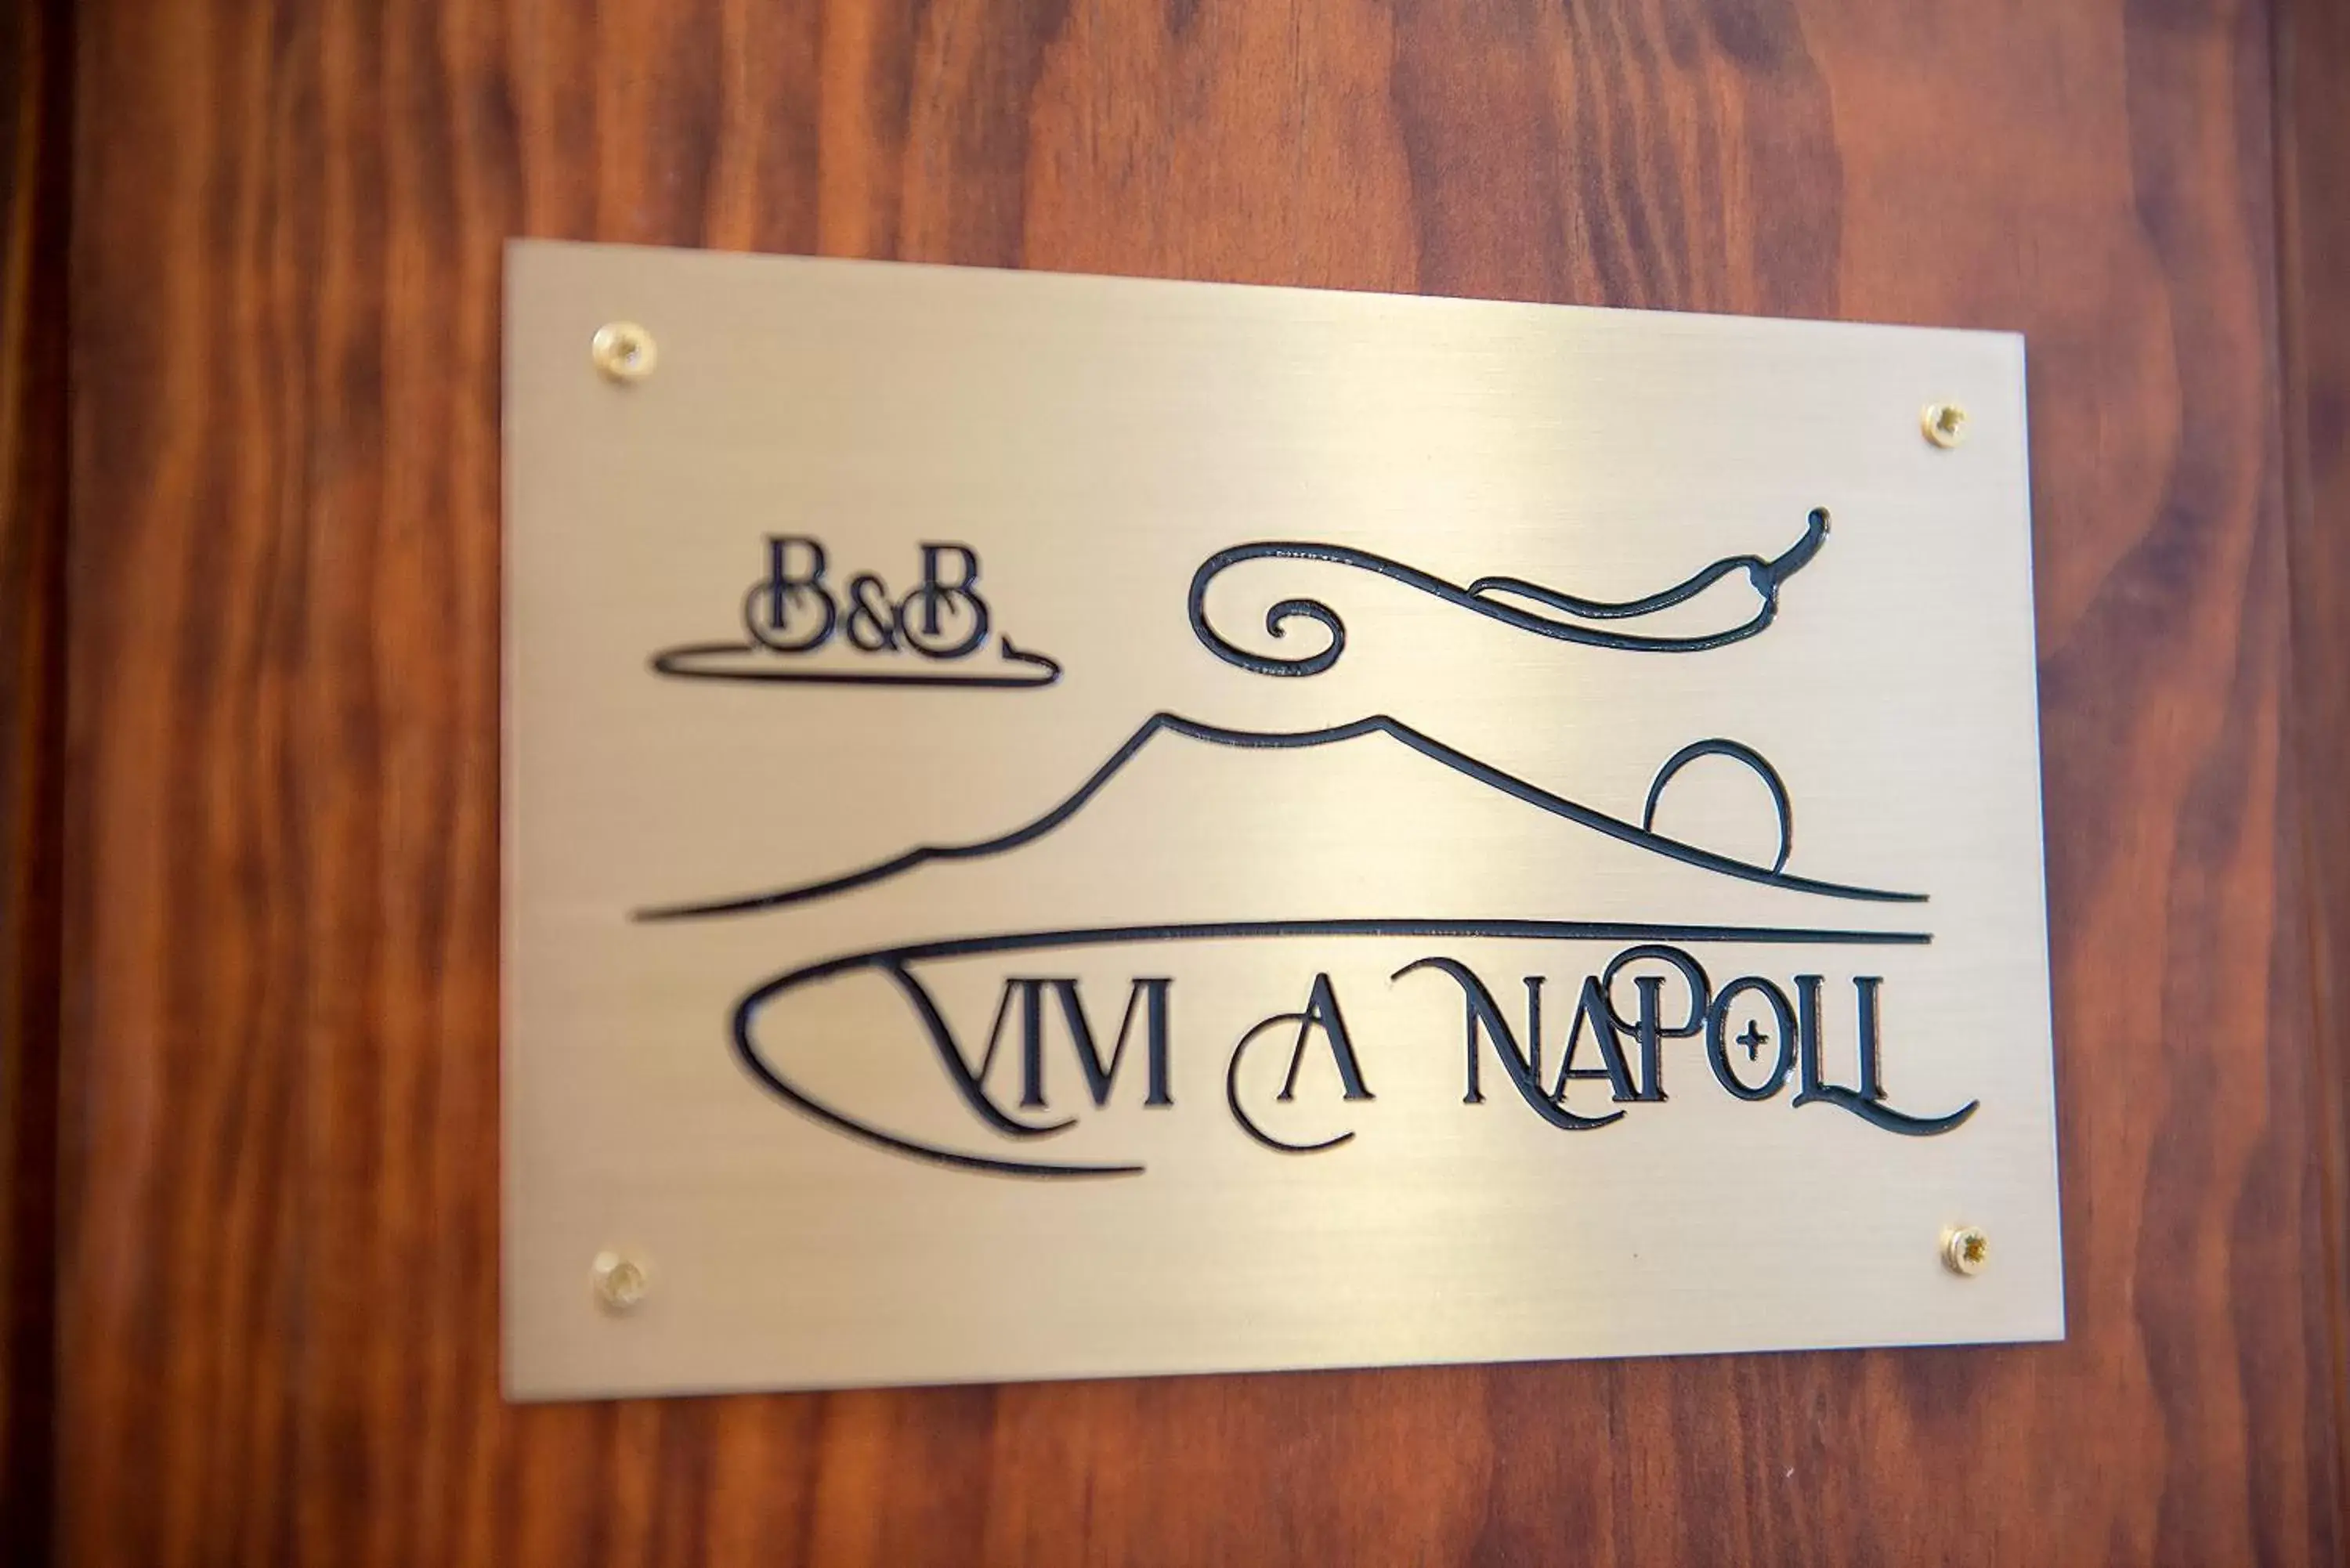 Property logo or sign in VIVI A NAPOLI